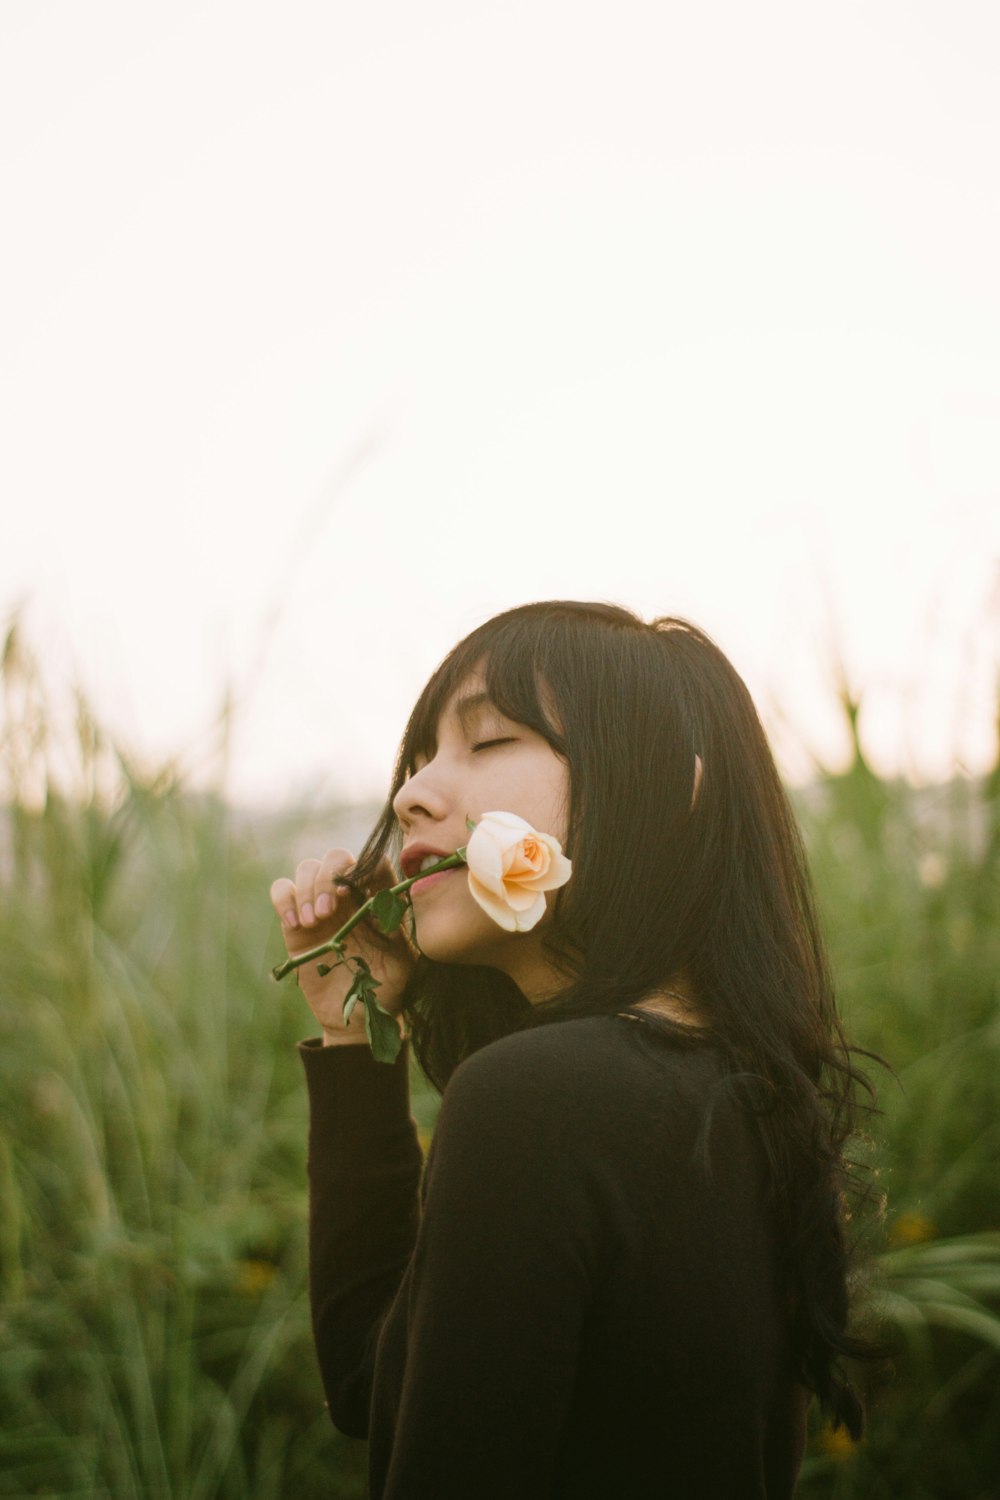 woman in black long sleeve shirt blowing white dandelion flower during daytime